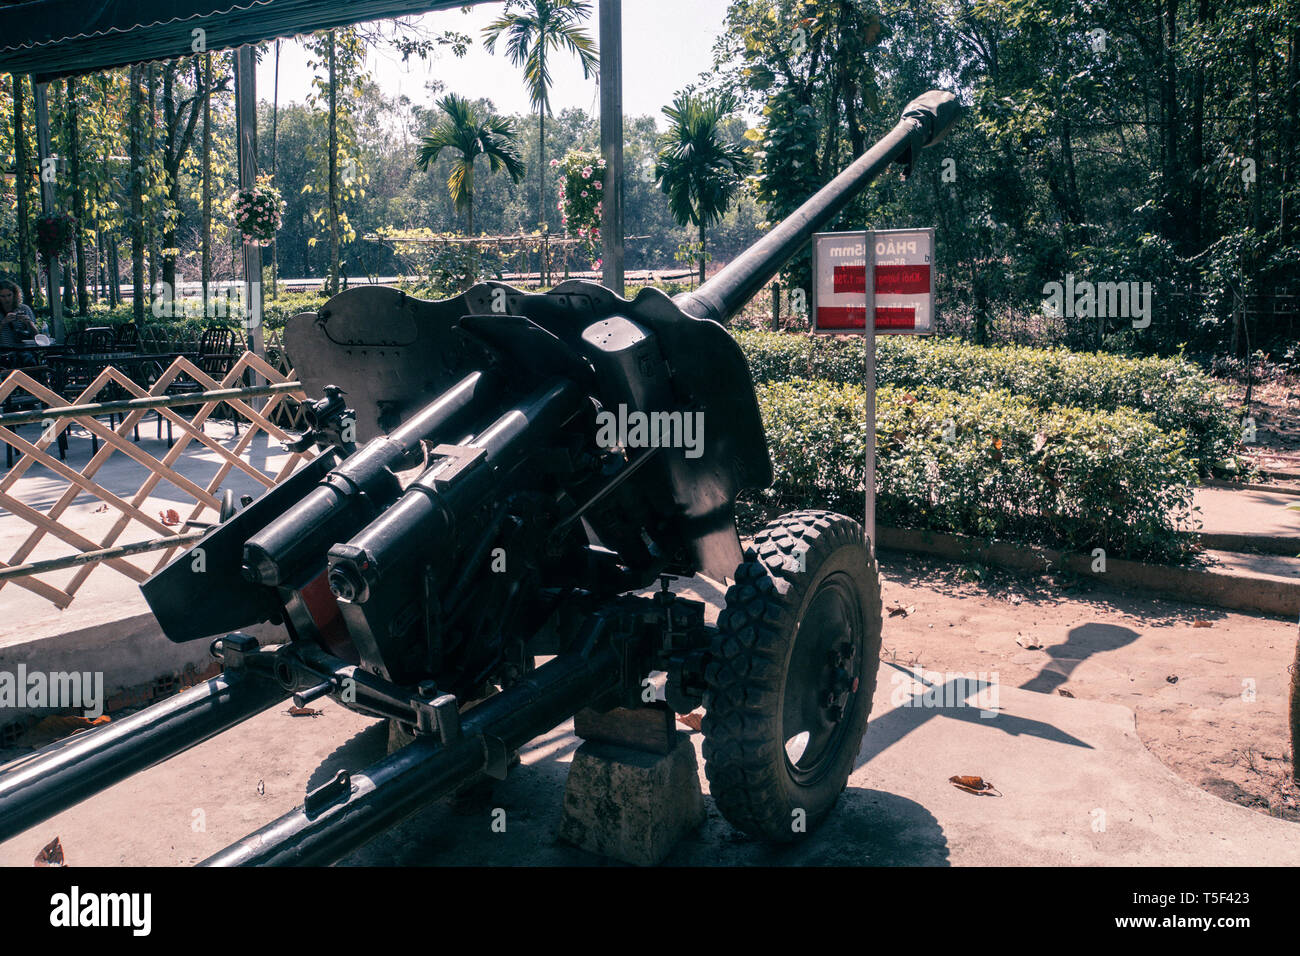 Artillerie in Vietnam Krieg. Stockfoto